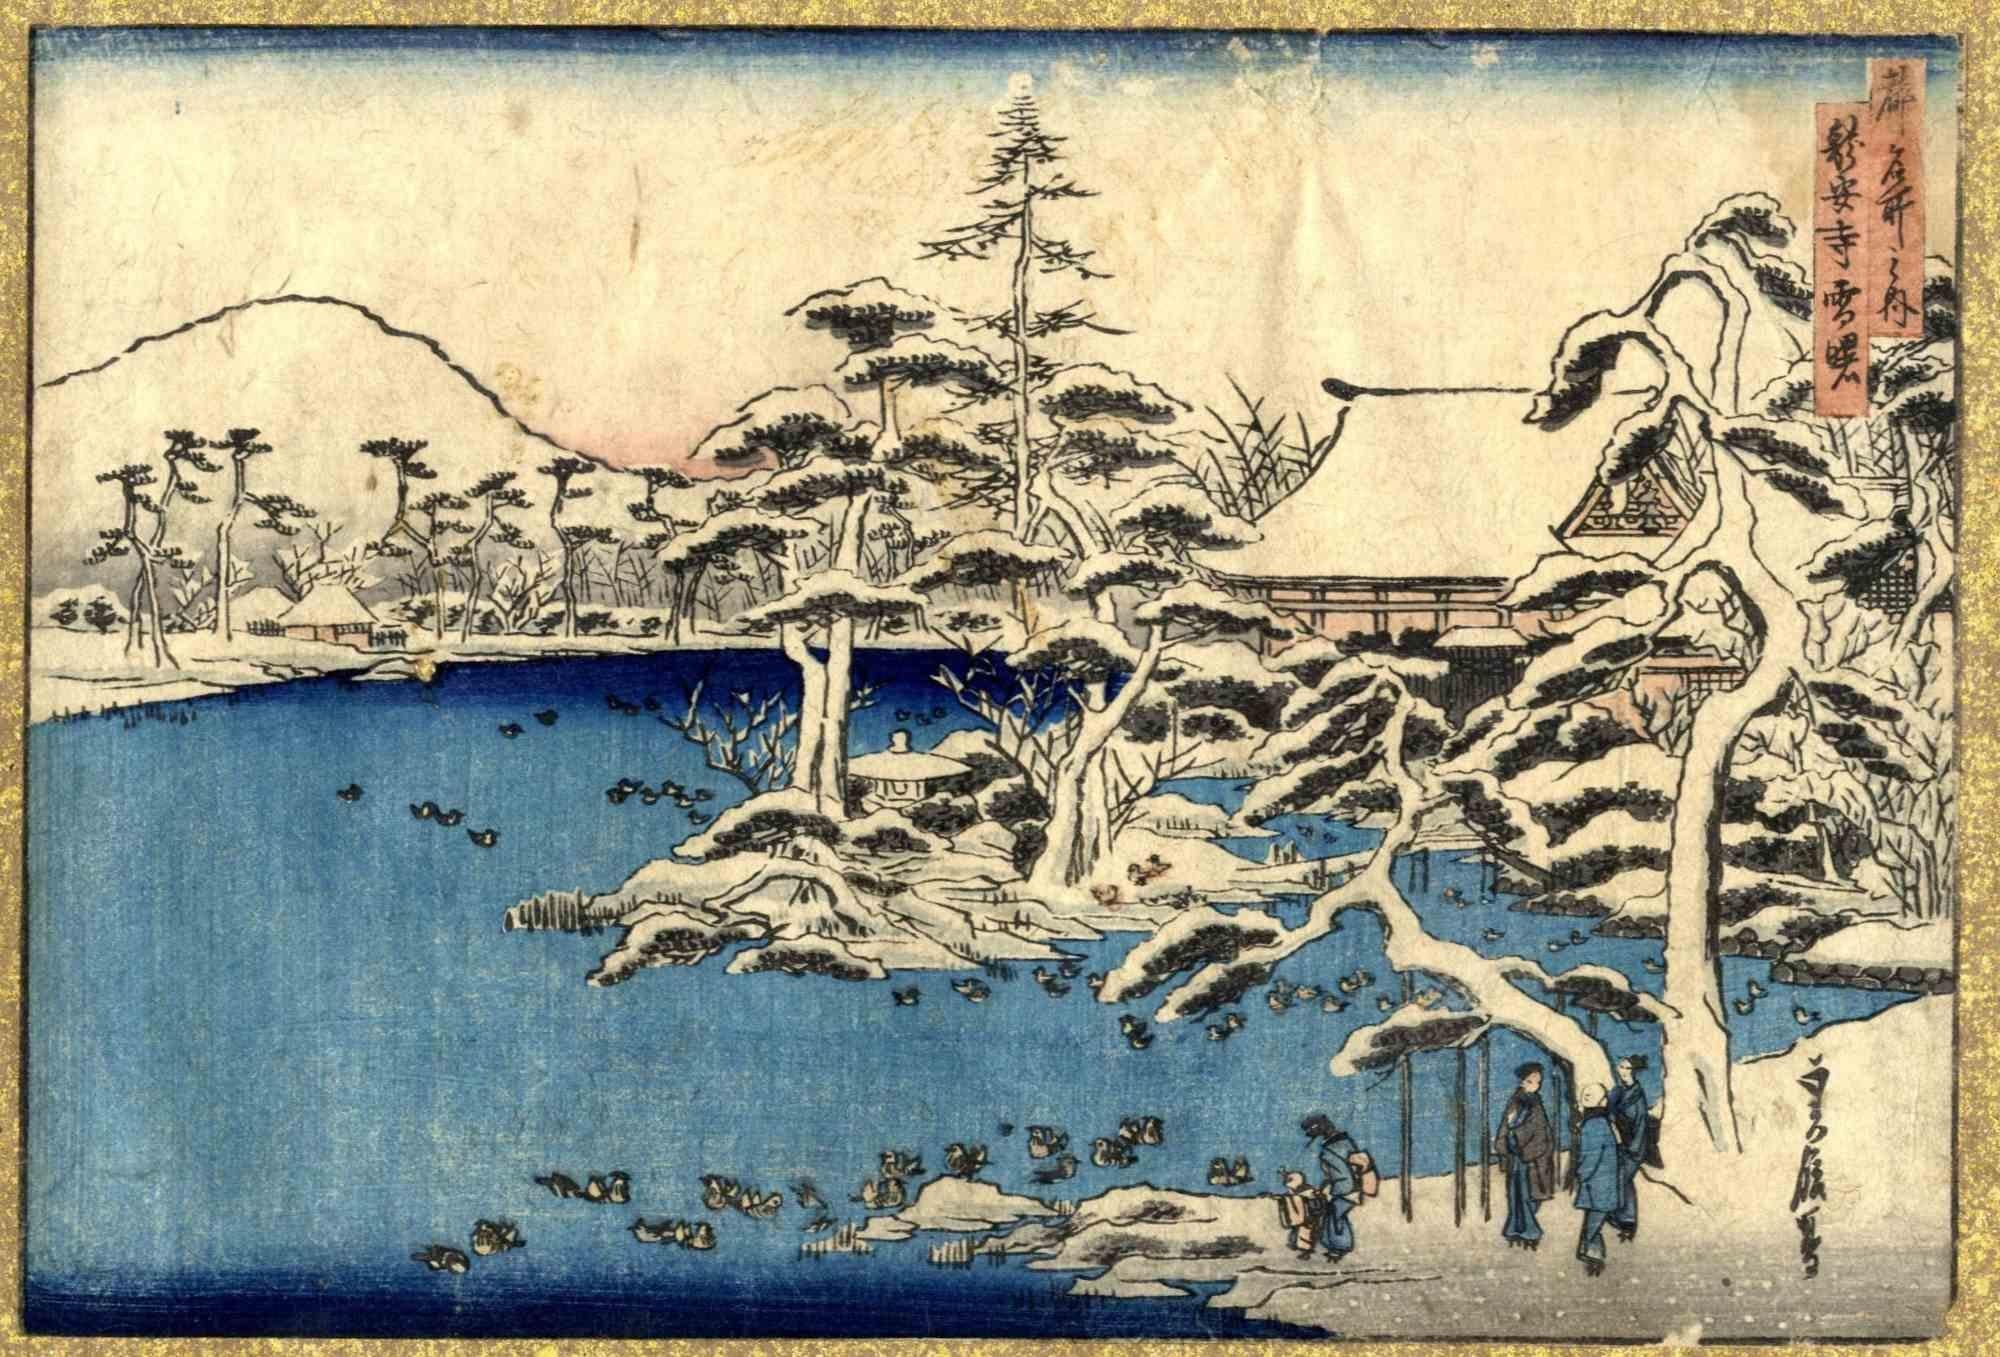 Hasegawa Sadanobu I Figurative Print - Ryoanji Temple in the Snow at Sunset- Woodcut by Hasegawa Sadanobu-1850